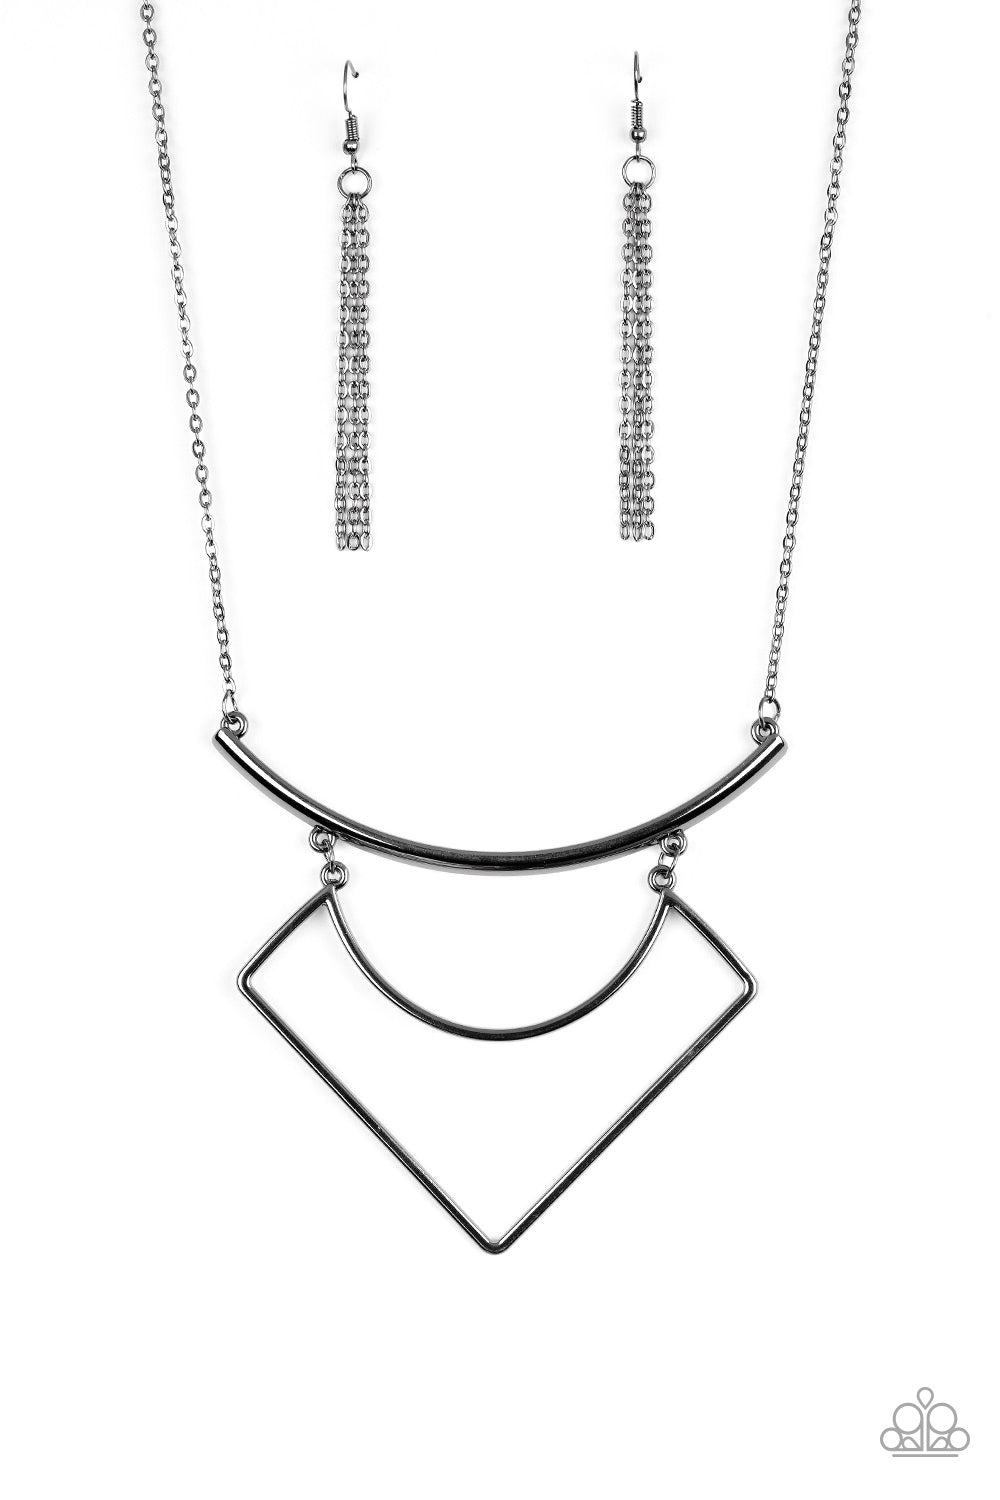 Egyptian Edge - black necklace 1715